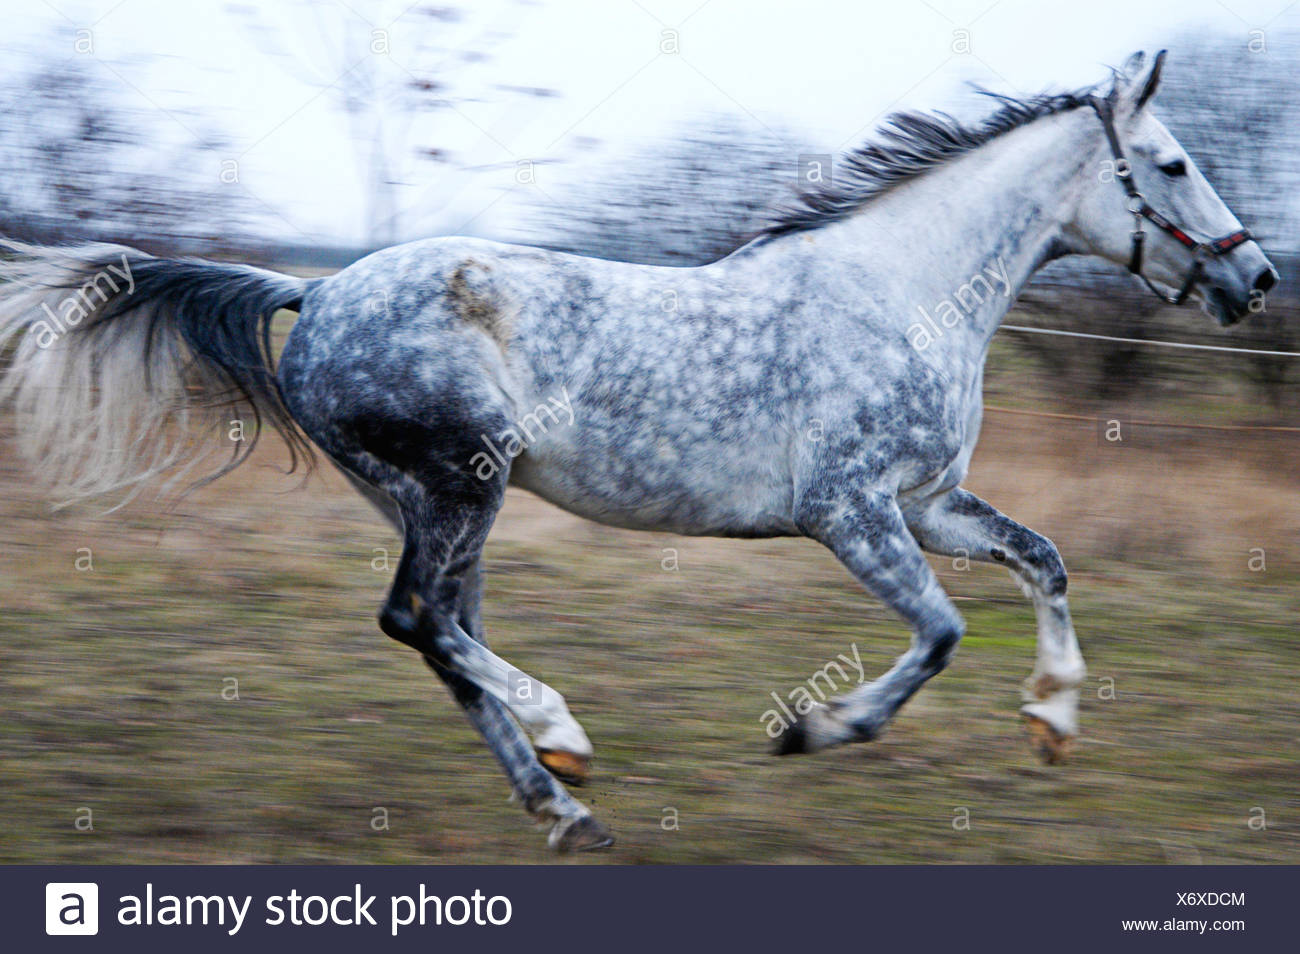 A Running Horse Equi Stock Photo Alamy